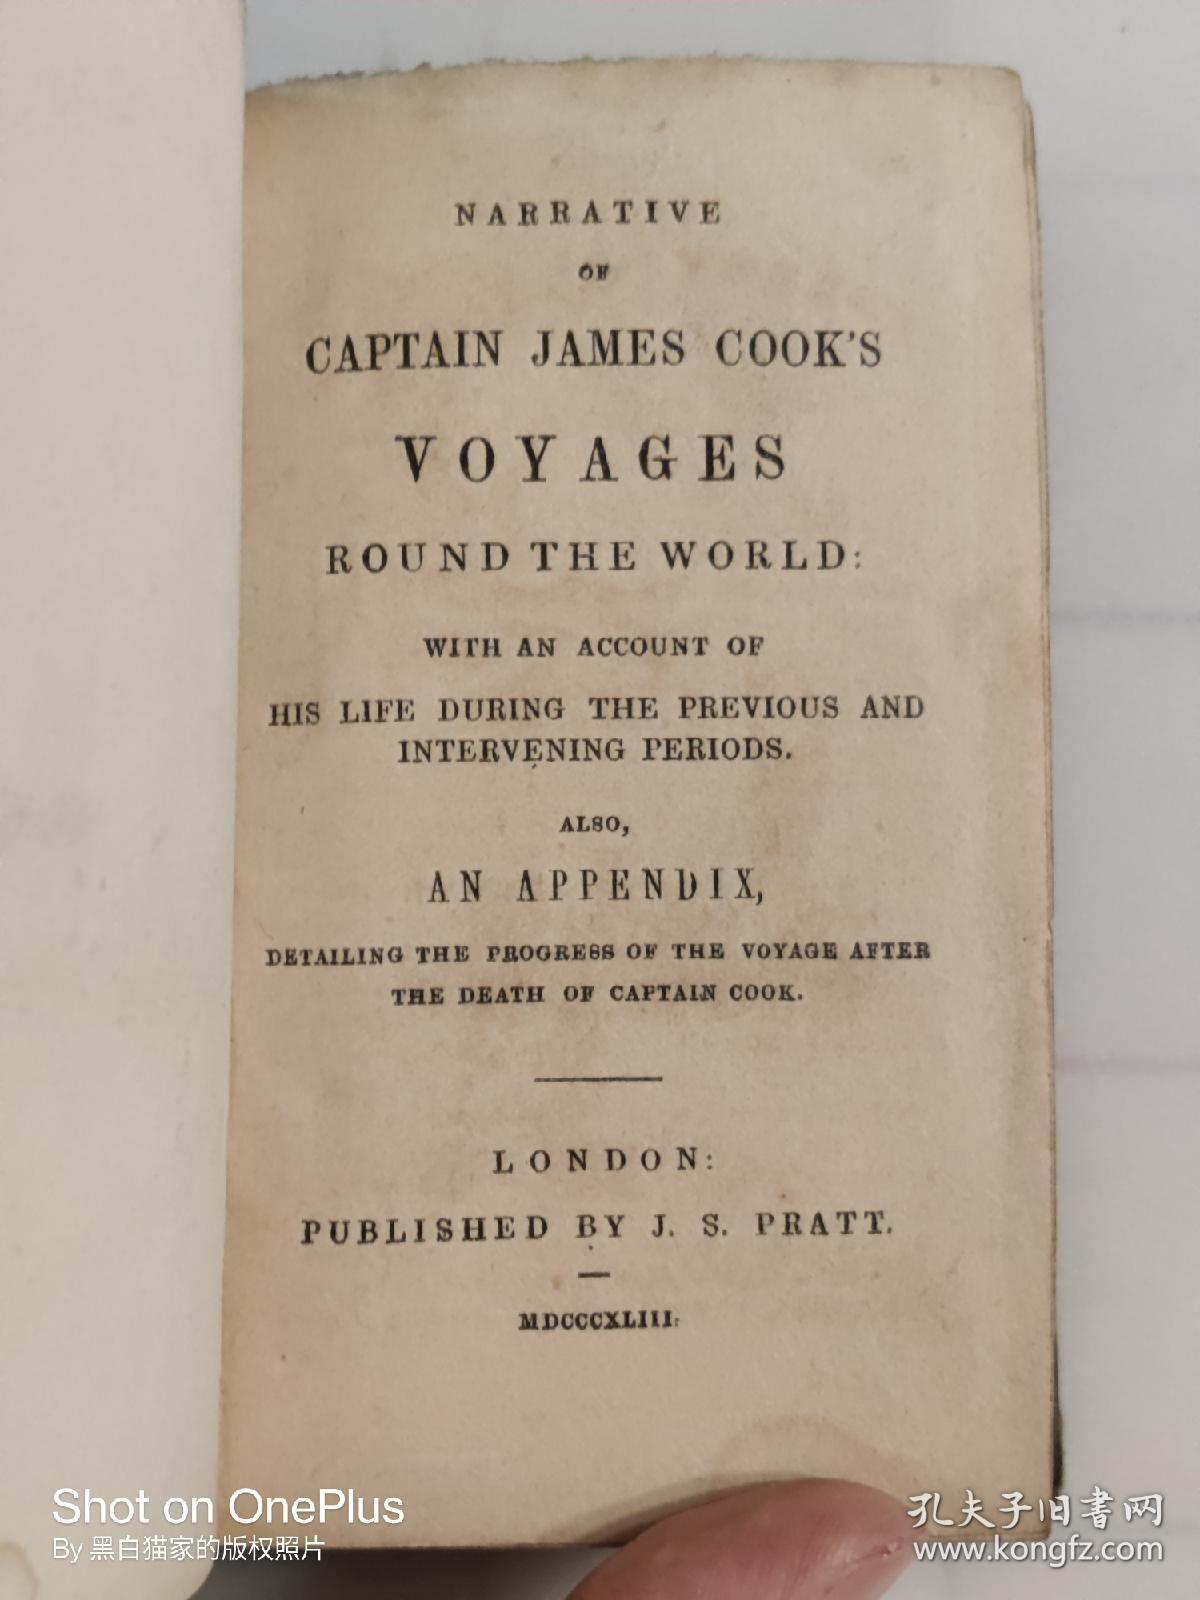 《Narrative on Captain JAMES COOK's voyages around the world》published by I.S.Pratt London,1843年，精装巾箱本，游记，詹姆斯库克船长